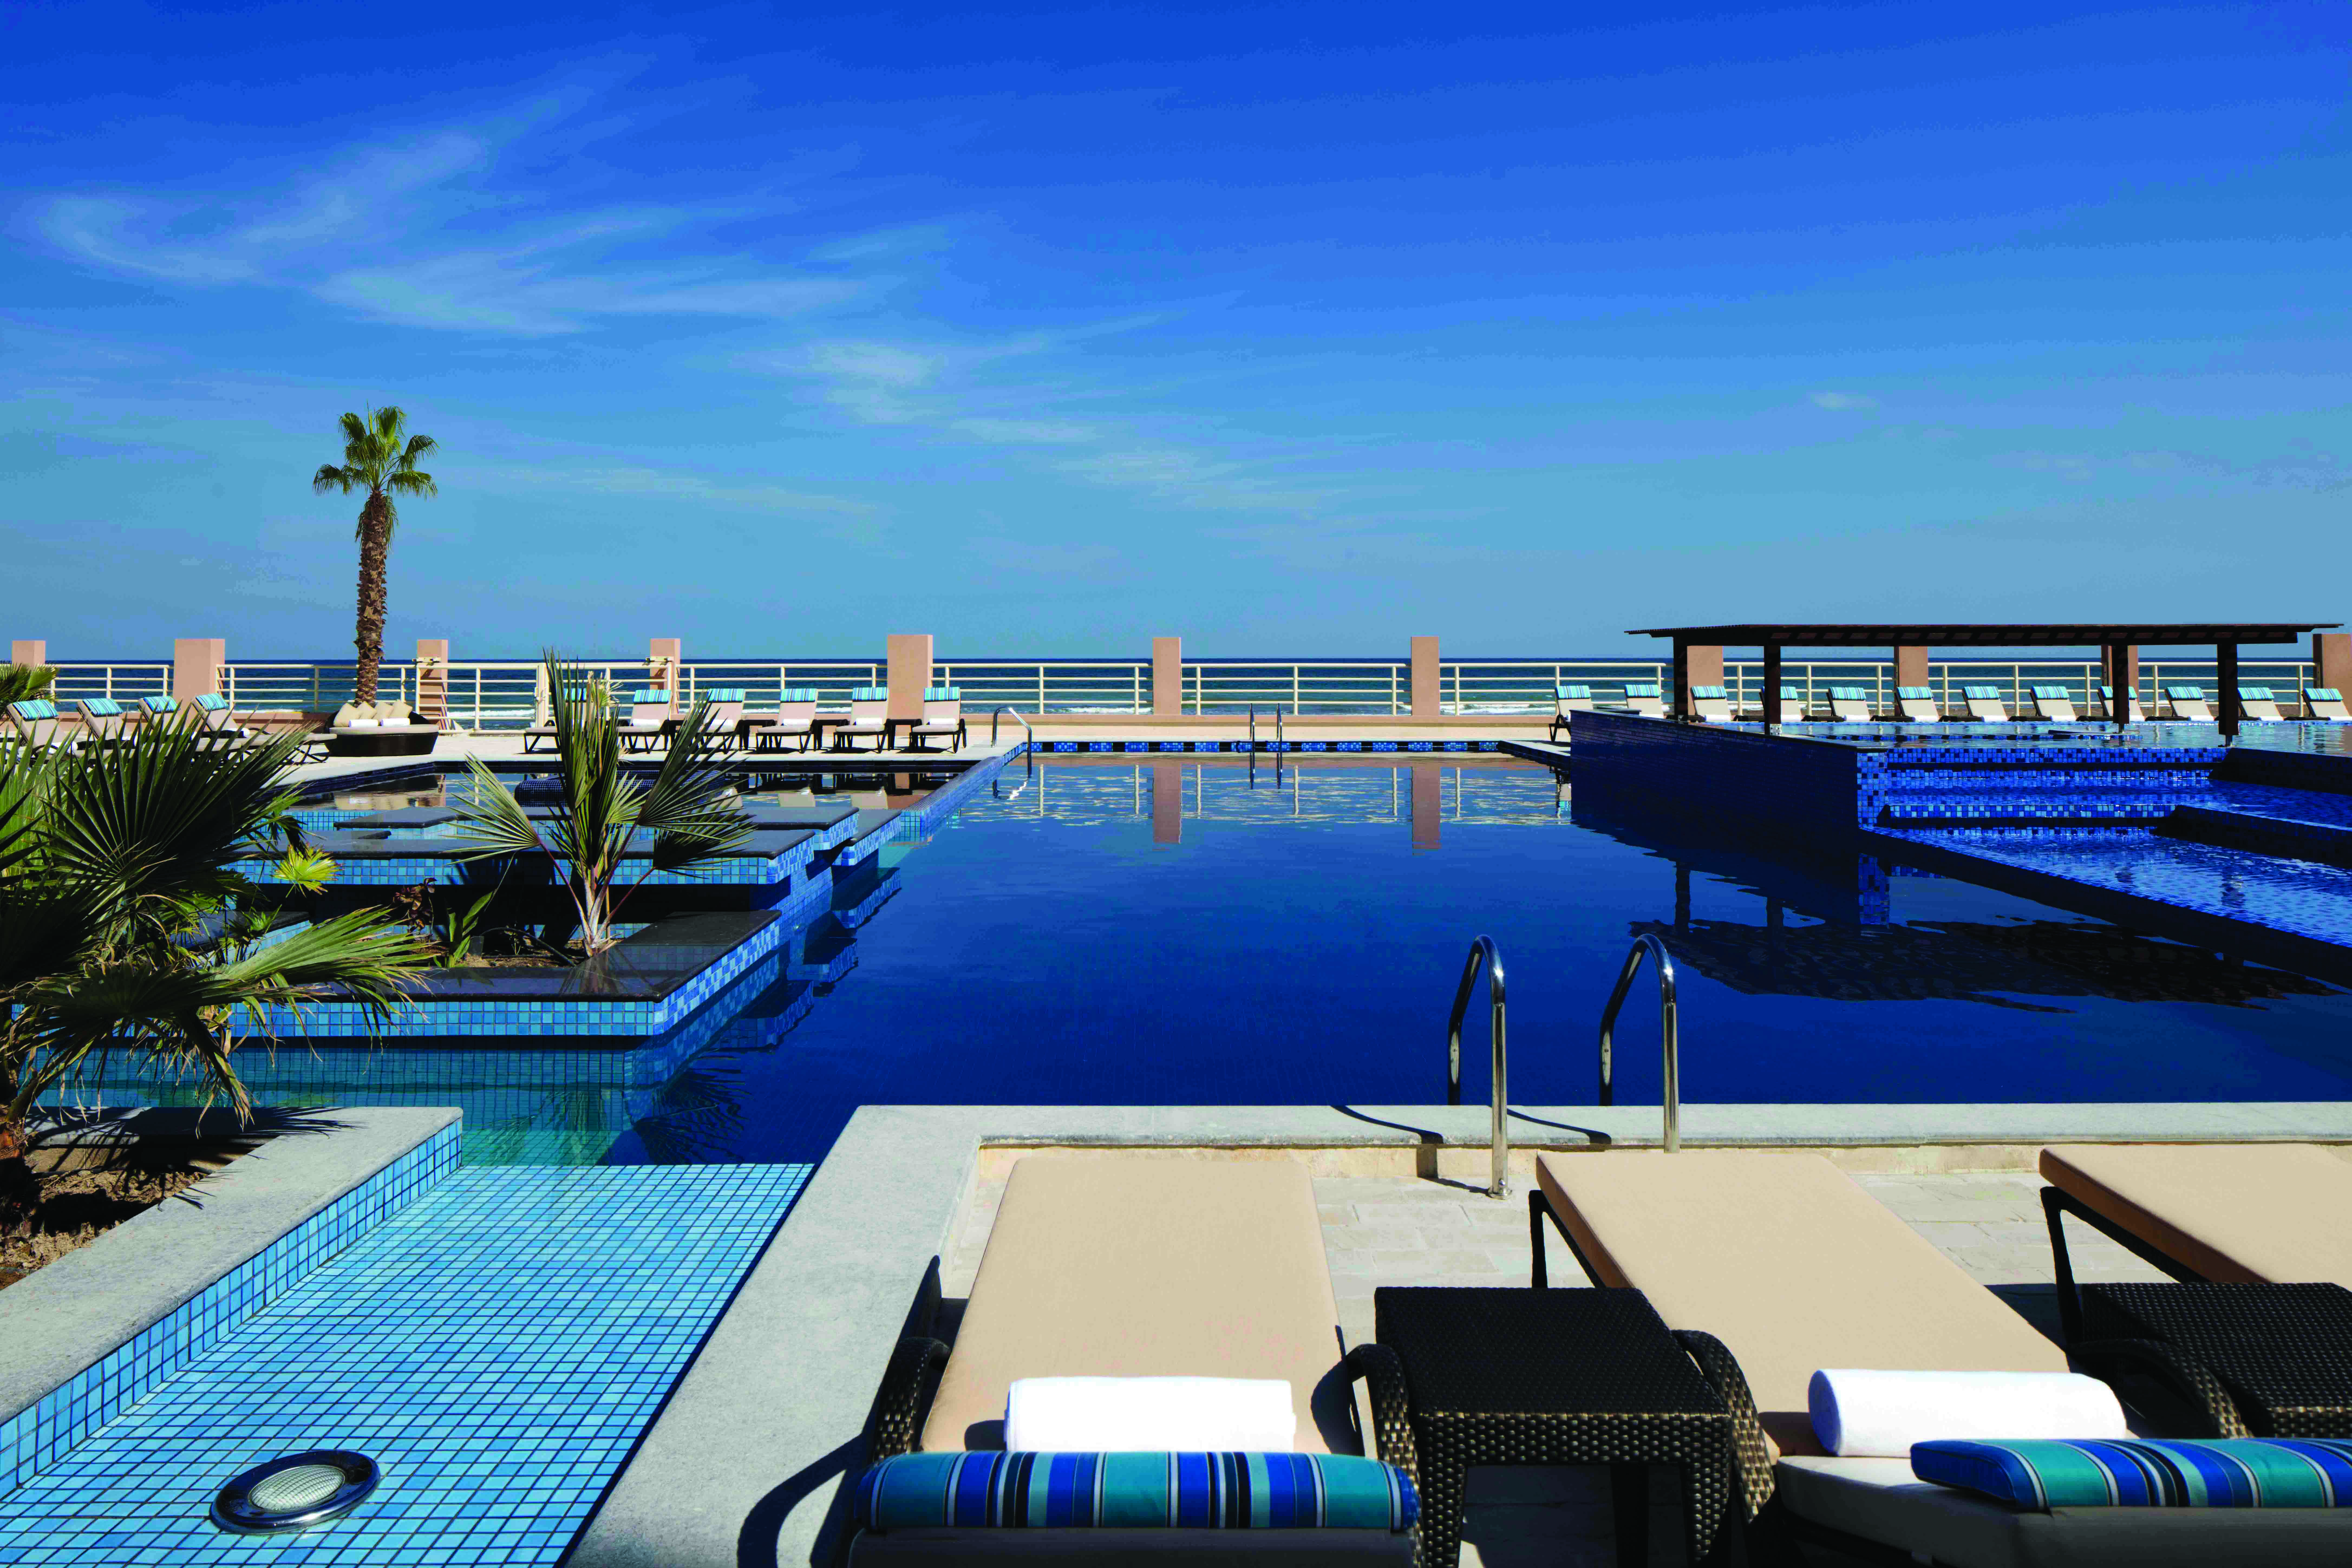 Radisson Blu Sohar: A Five Star Resort In Oman